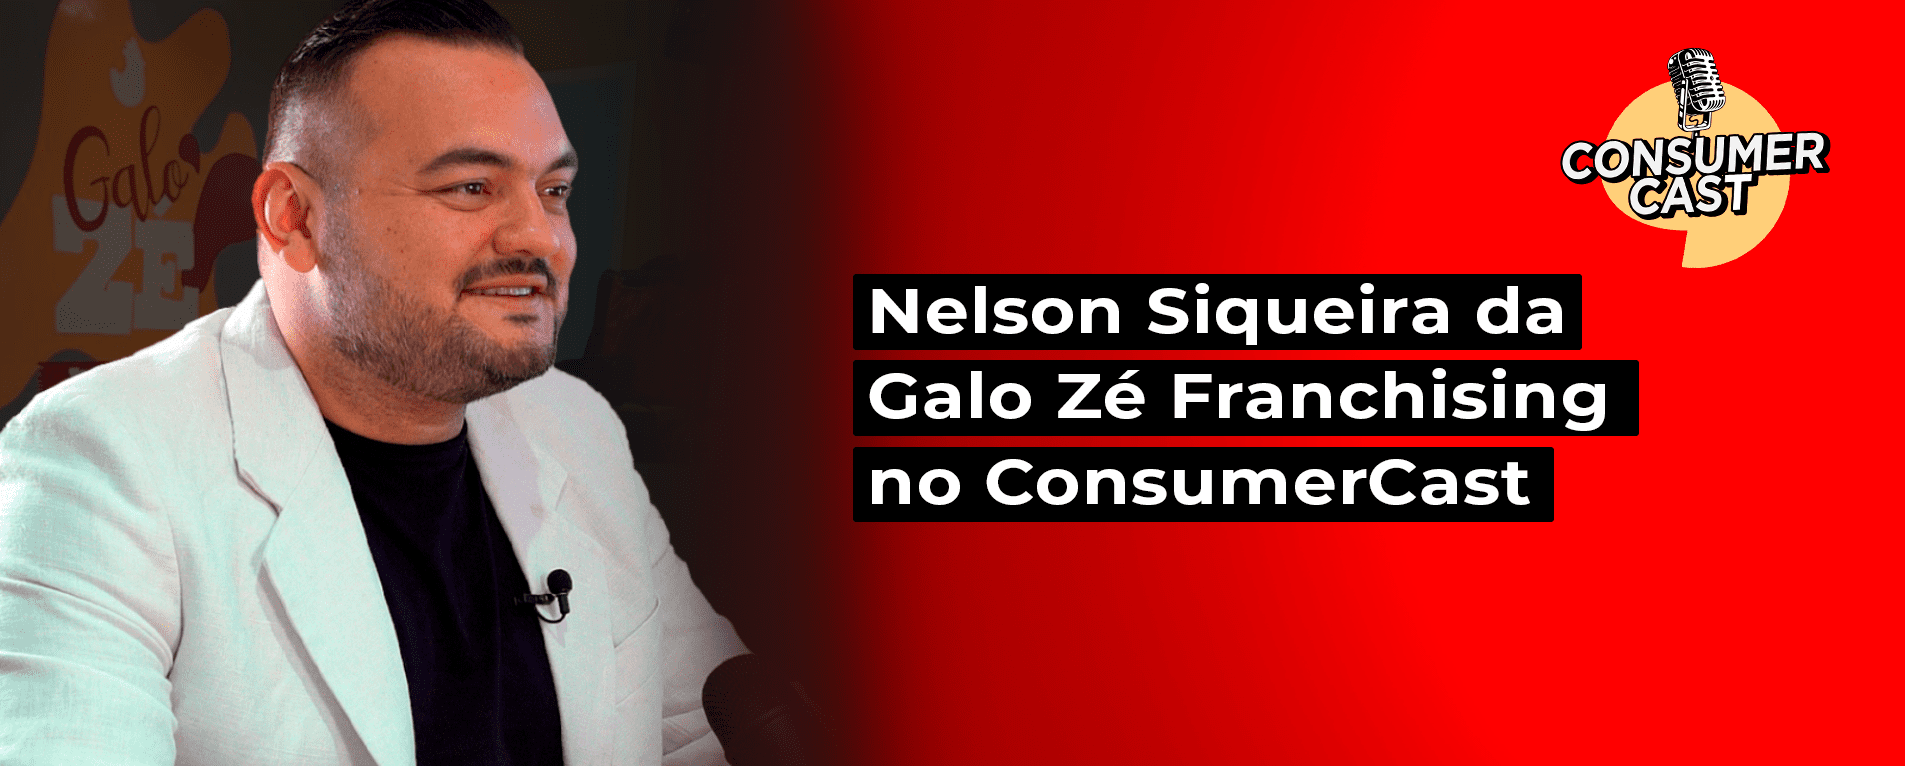 Nelson Siqueira da Galo Zé Franchising no ConsumerCast